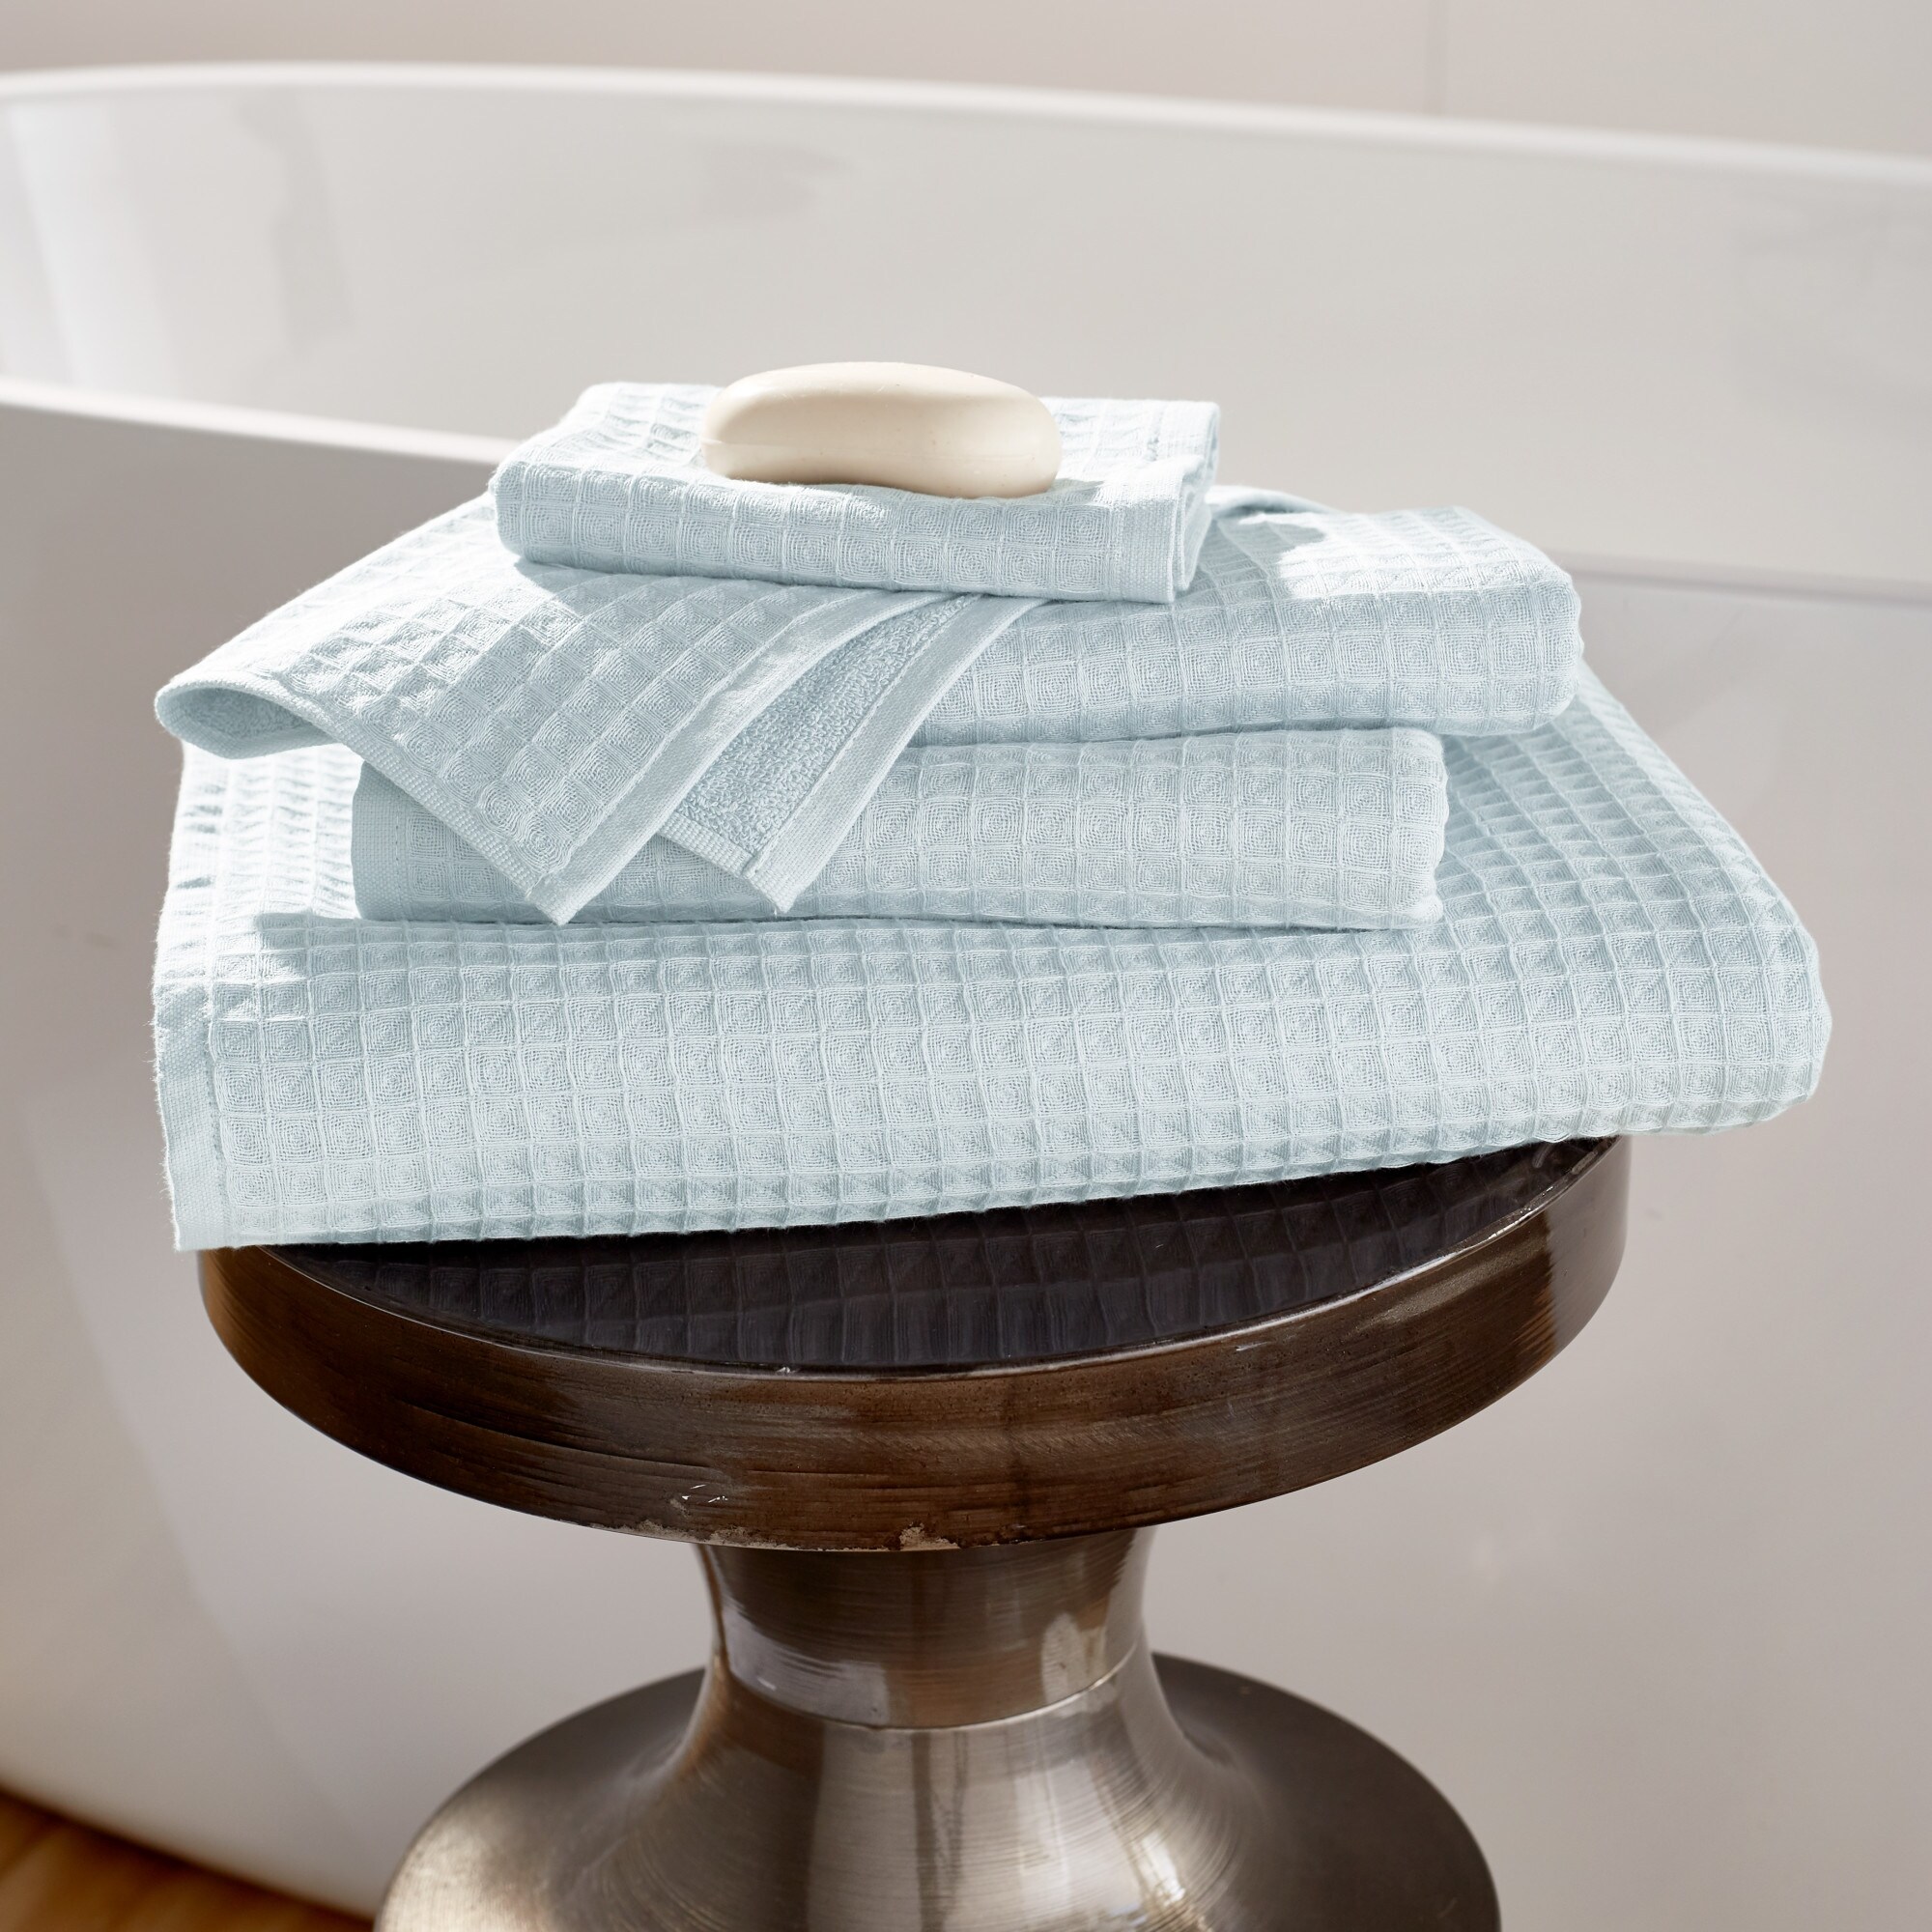 https://ak1.ostkcdn.com/images/products/is/images/direct/71a799fe78e7bddc3bad7c7e2f2455cc7d54433e/Waffle-Twist-Bath-Towel.jpg